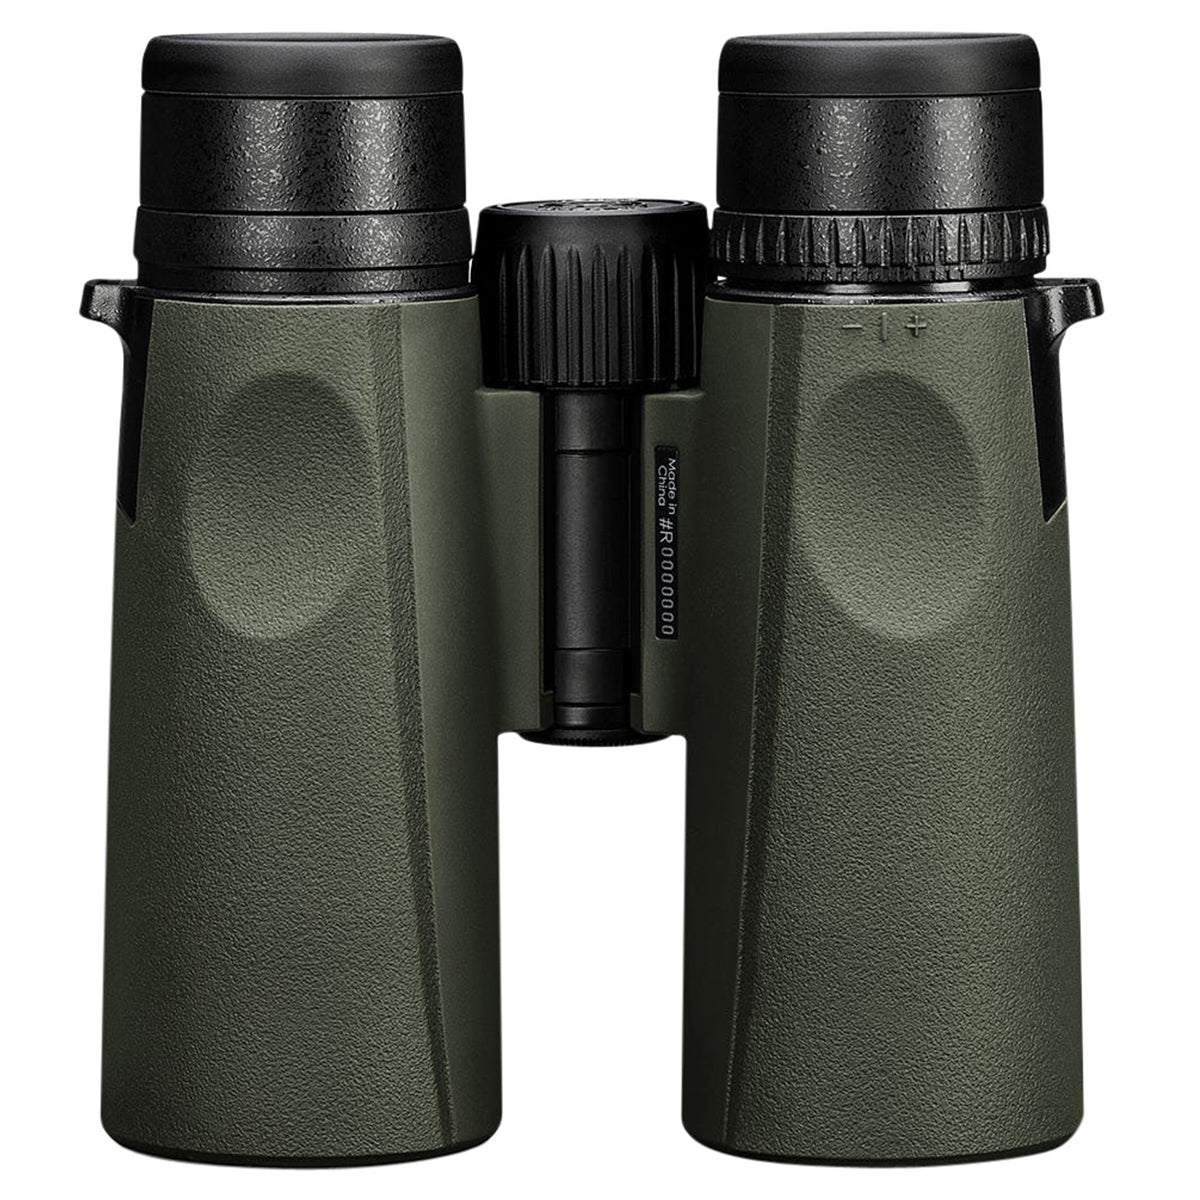 Vortex Viper HD 8x42 Binoculars by Vortex Optics | Optics - goHUNT Shop